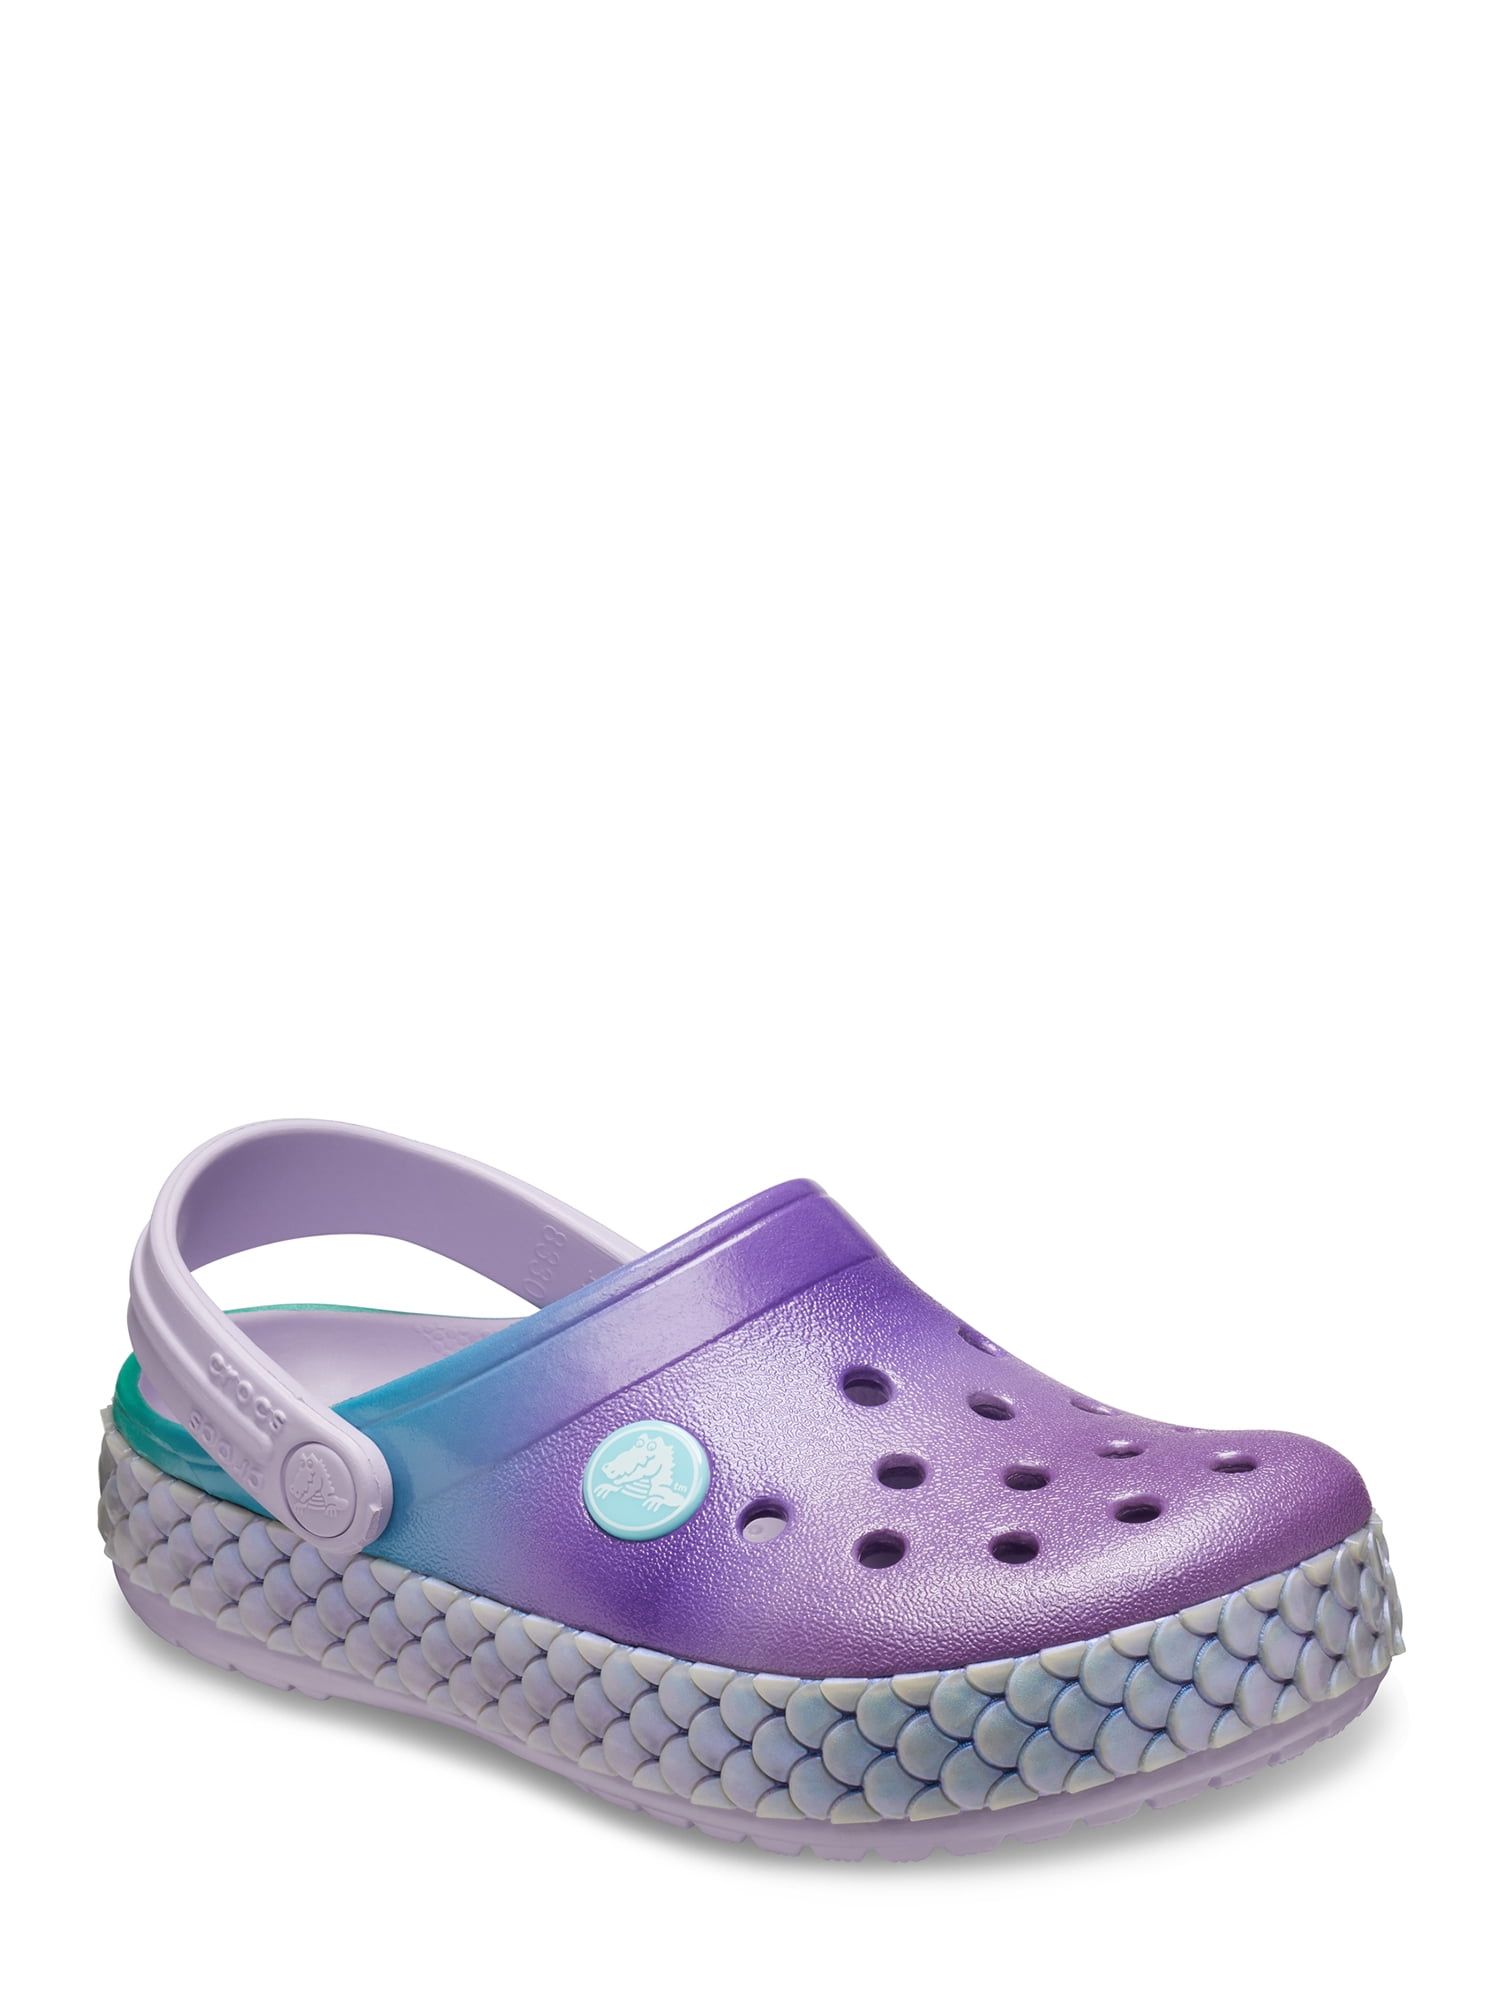 mermaid crocs for toddlers